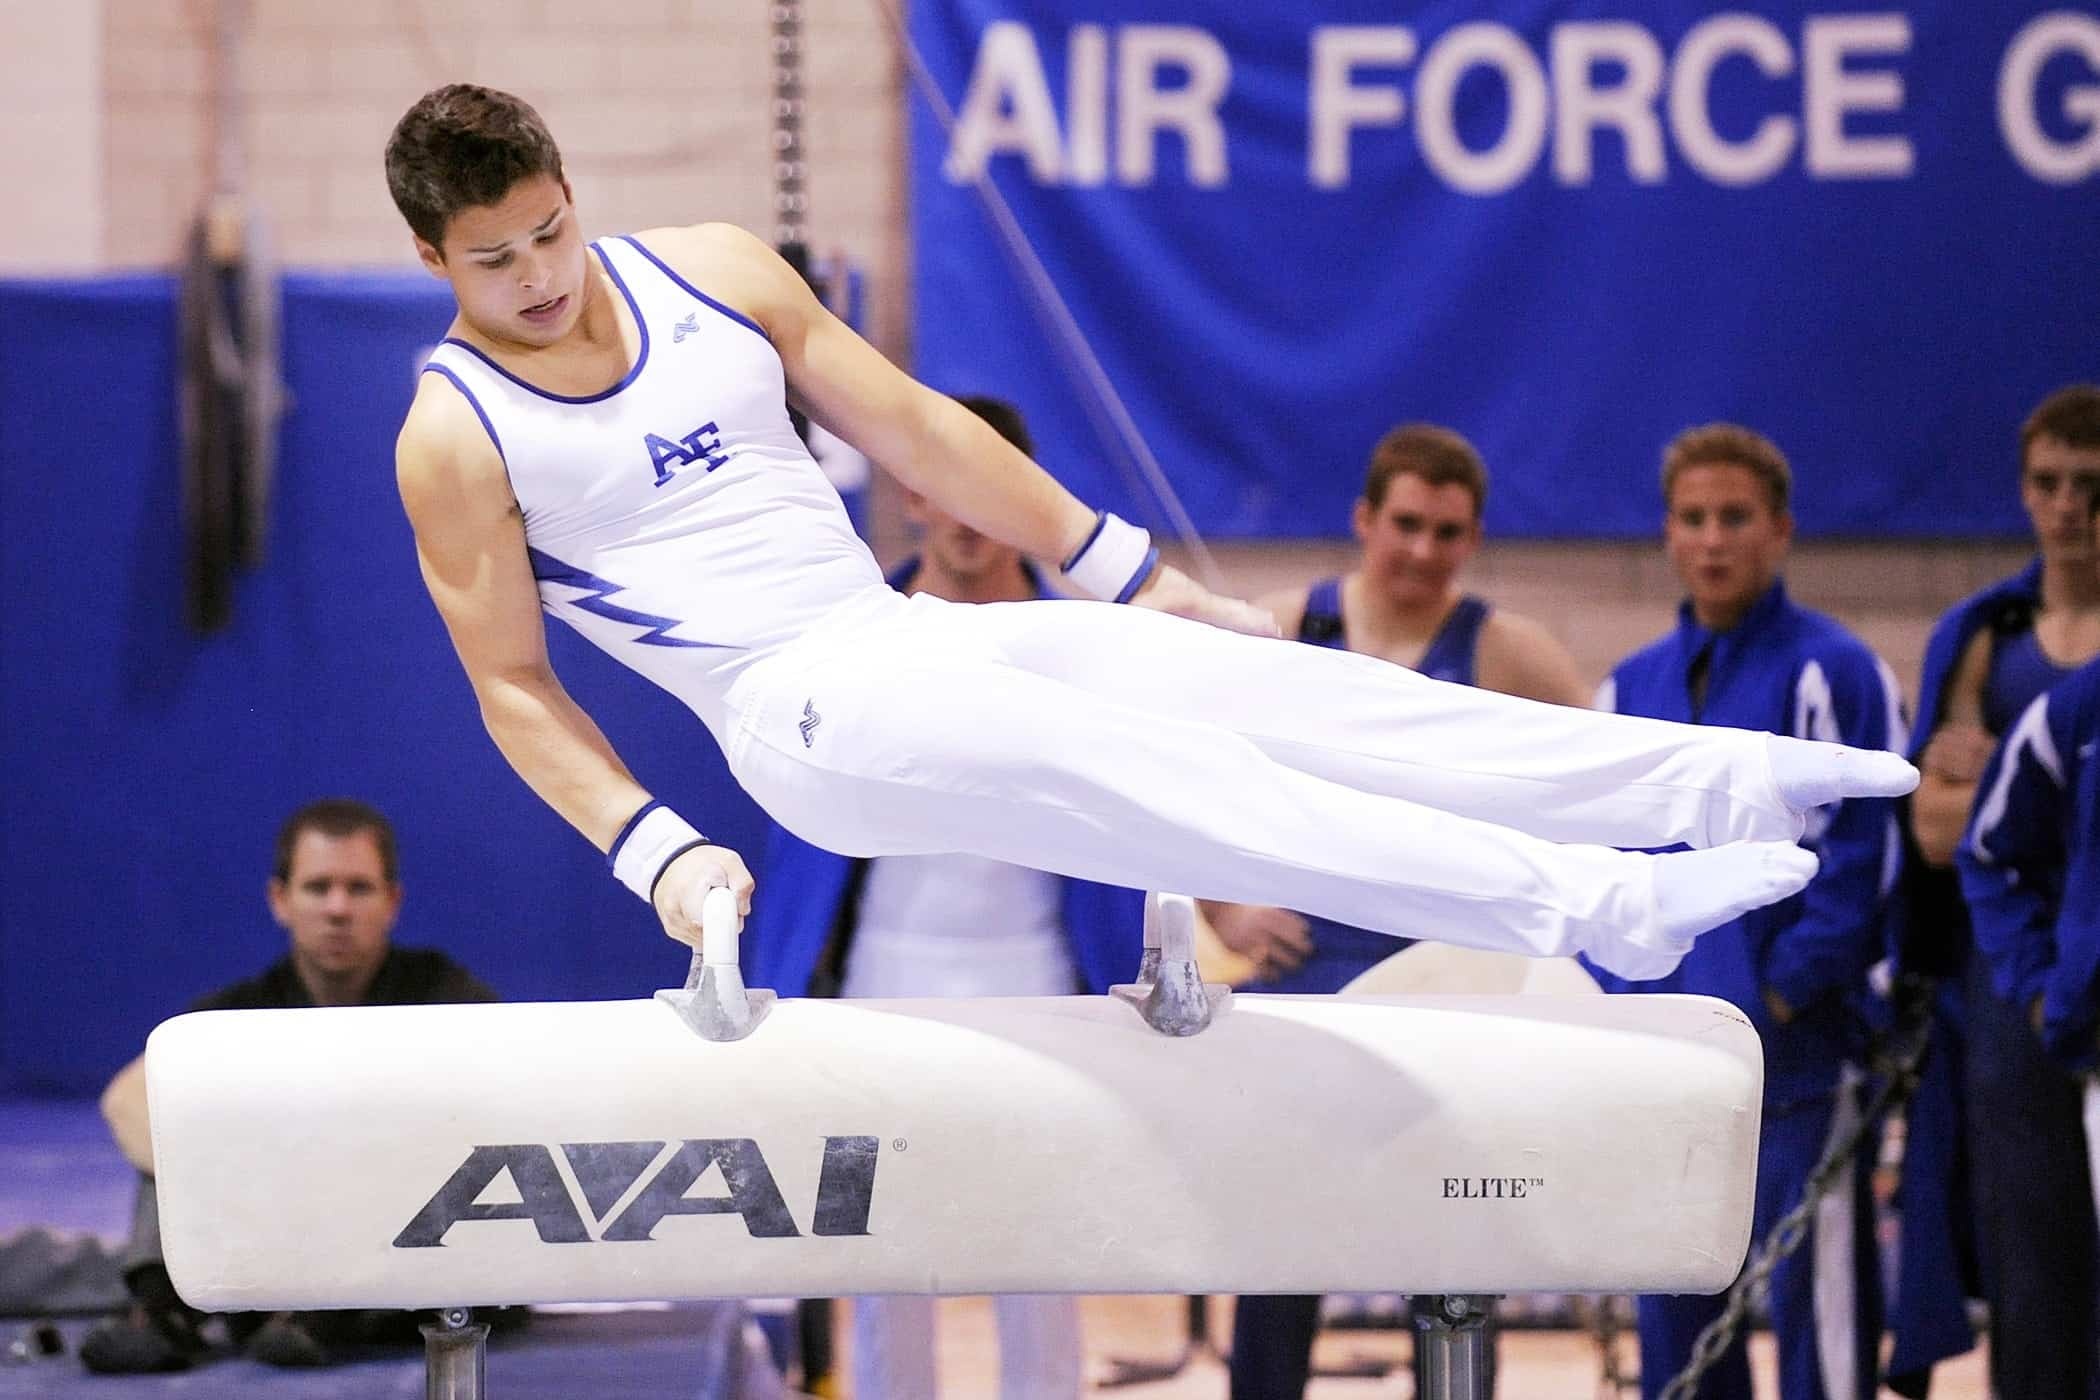 Acrobatic Sports: Air Force Gymnastics, Male gymnasts, Pommel horse. 2100x1400 HD Wallpaper.